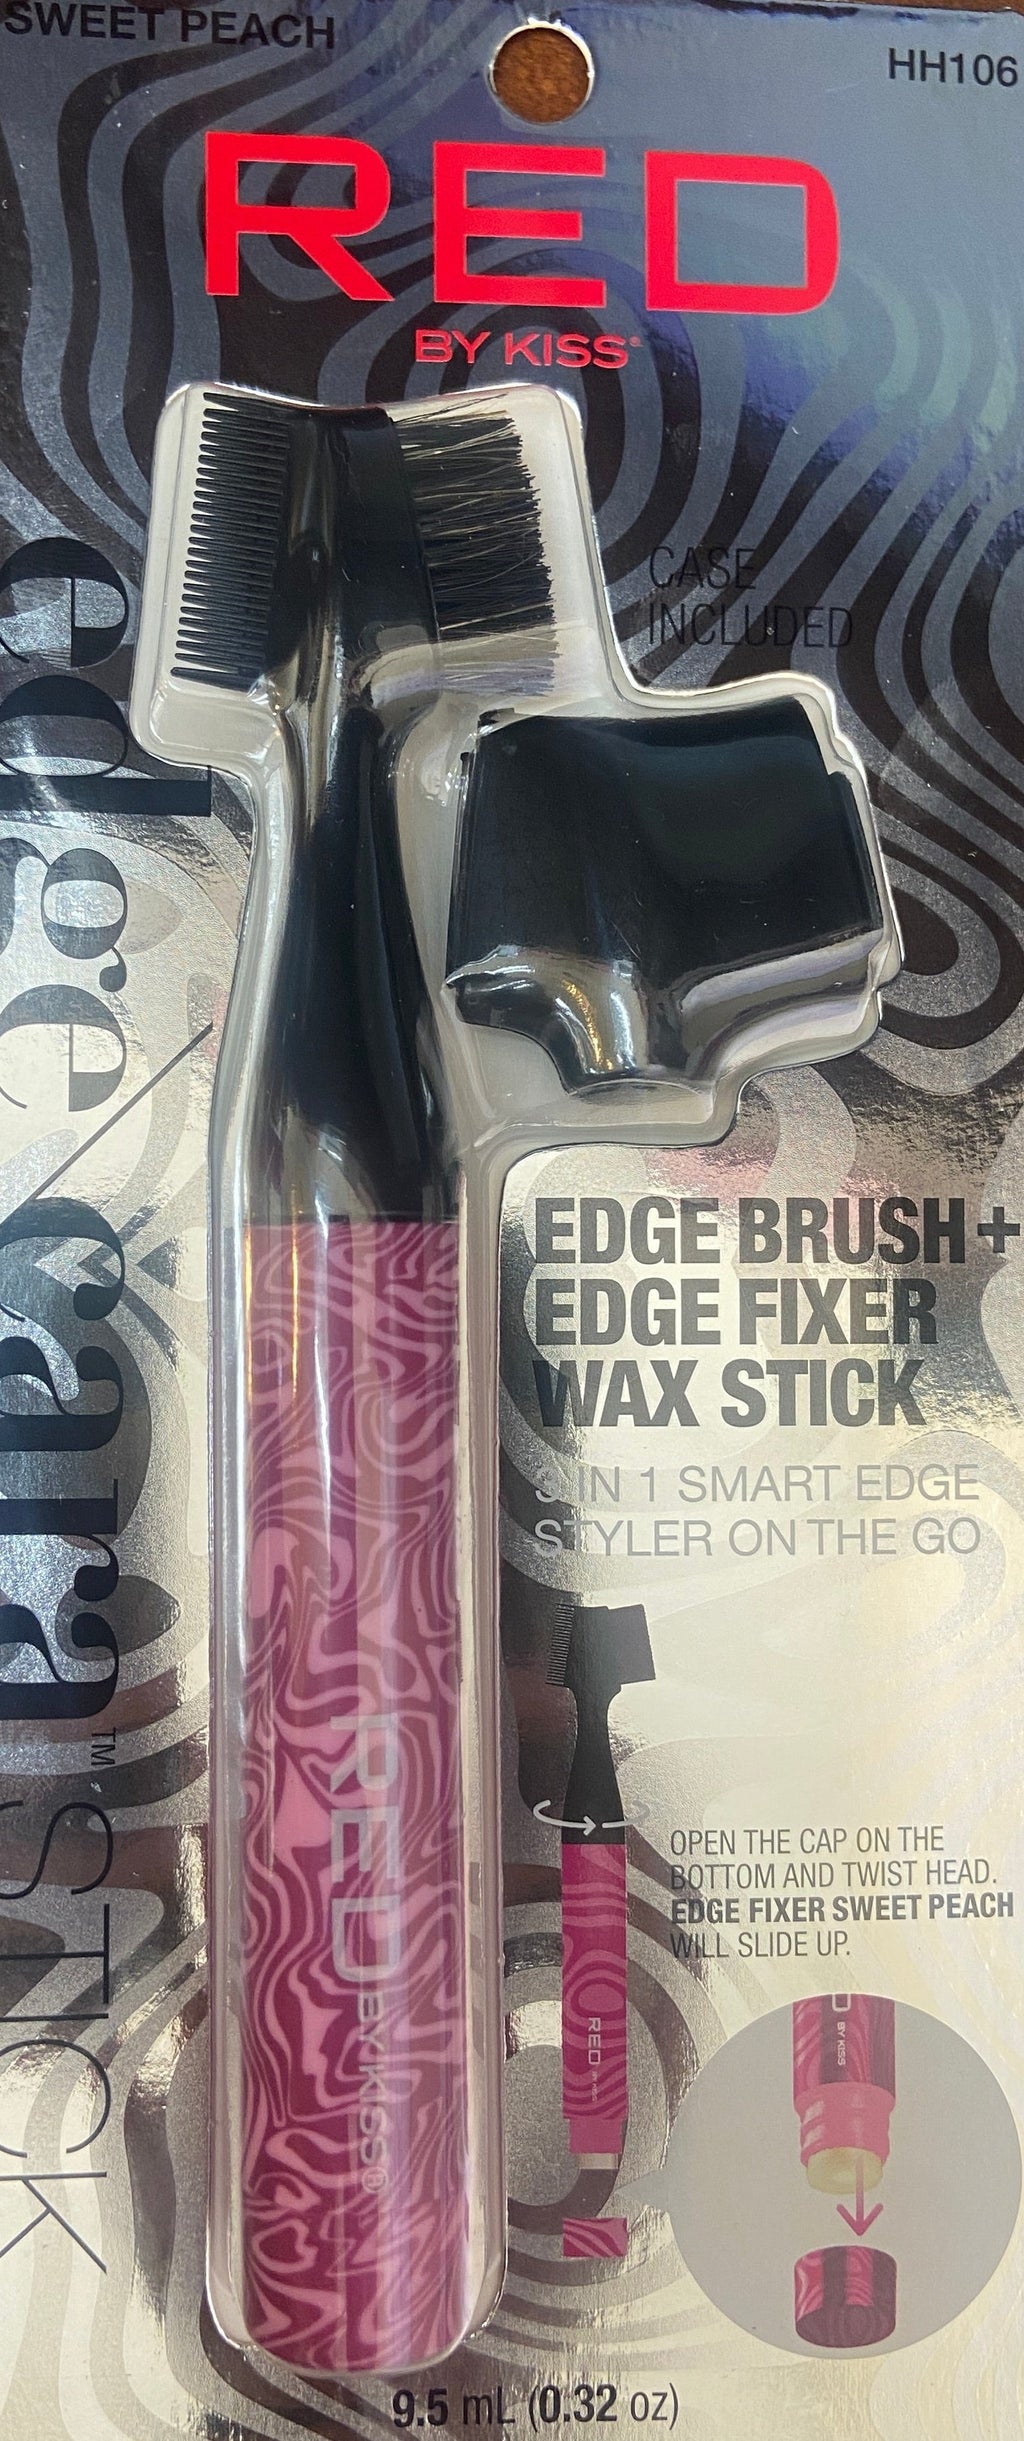 Edge Cara Stick, 3-in-1 Smart Edge Styler On The Go